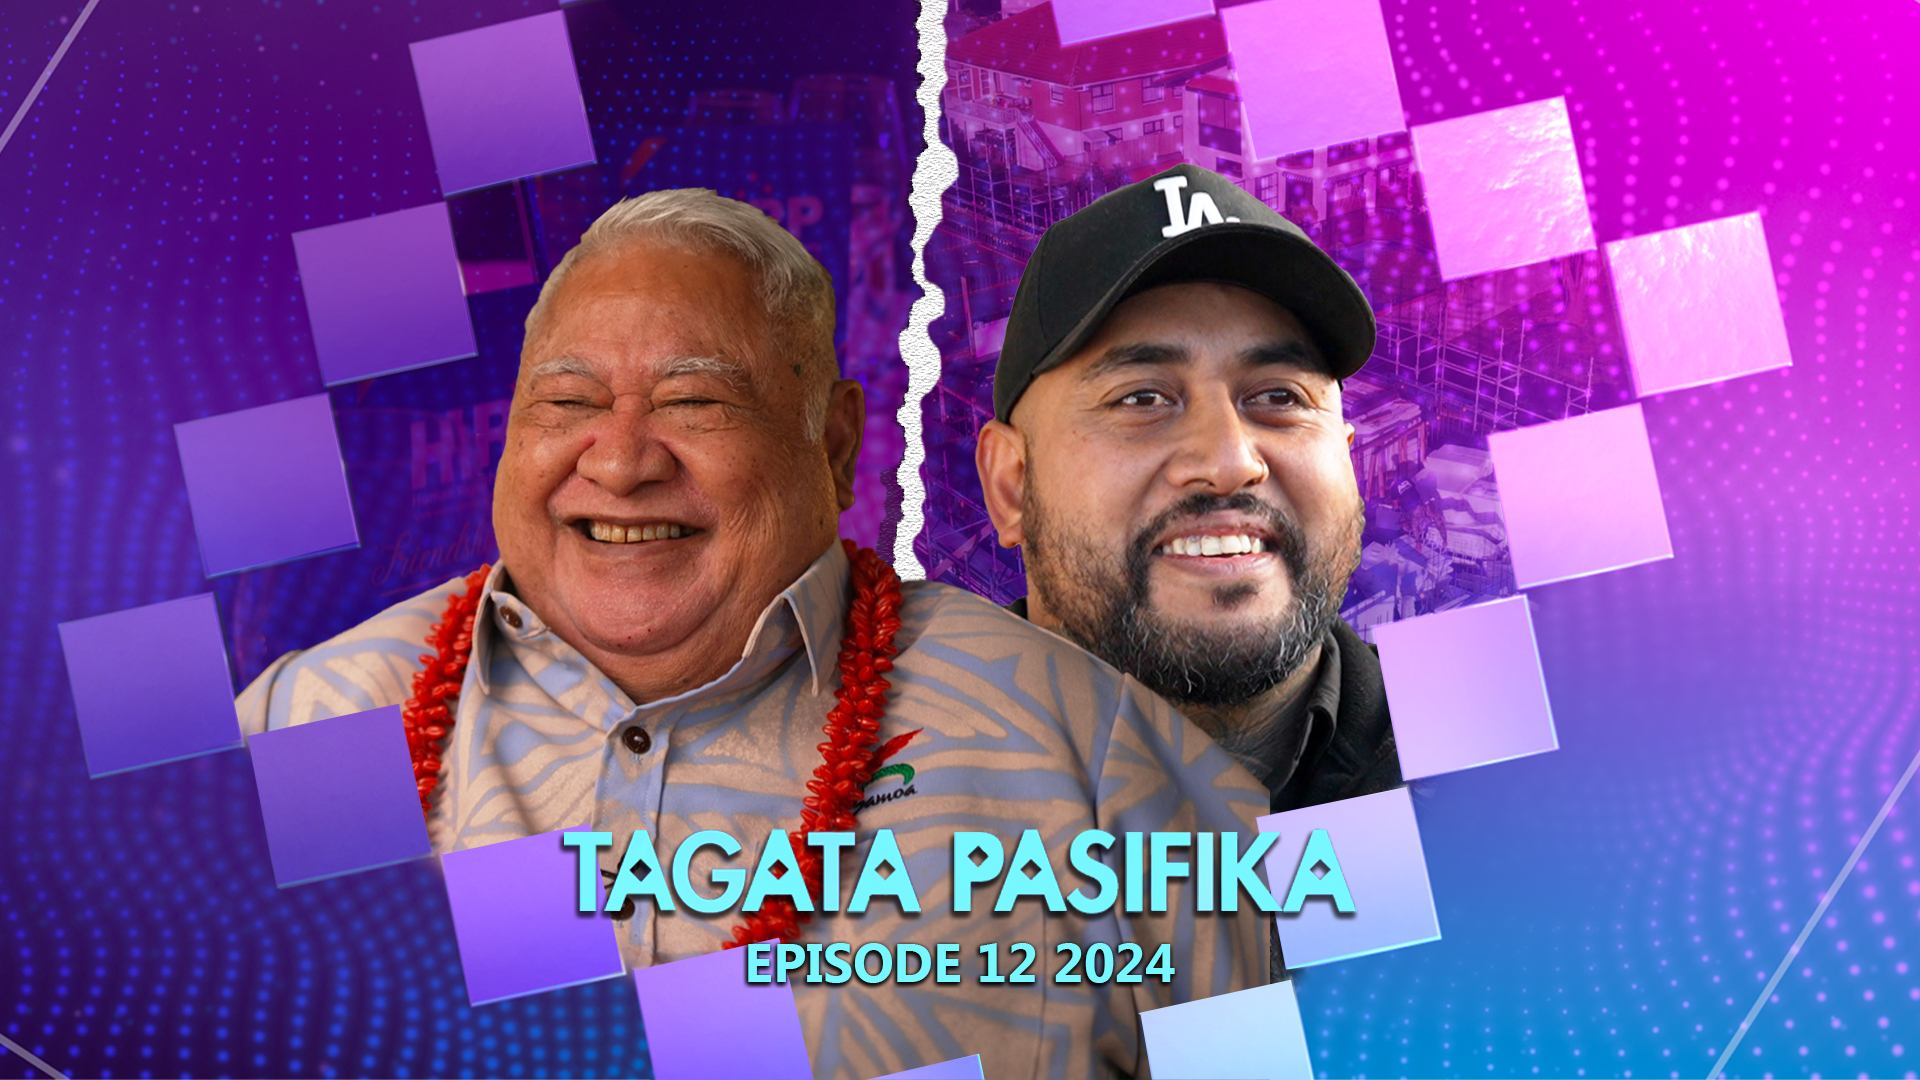 WATCH: Tagata Pasifika 2024 Episode 12